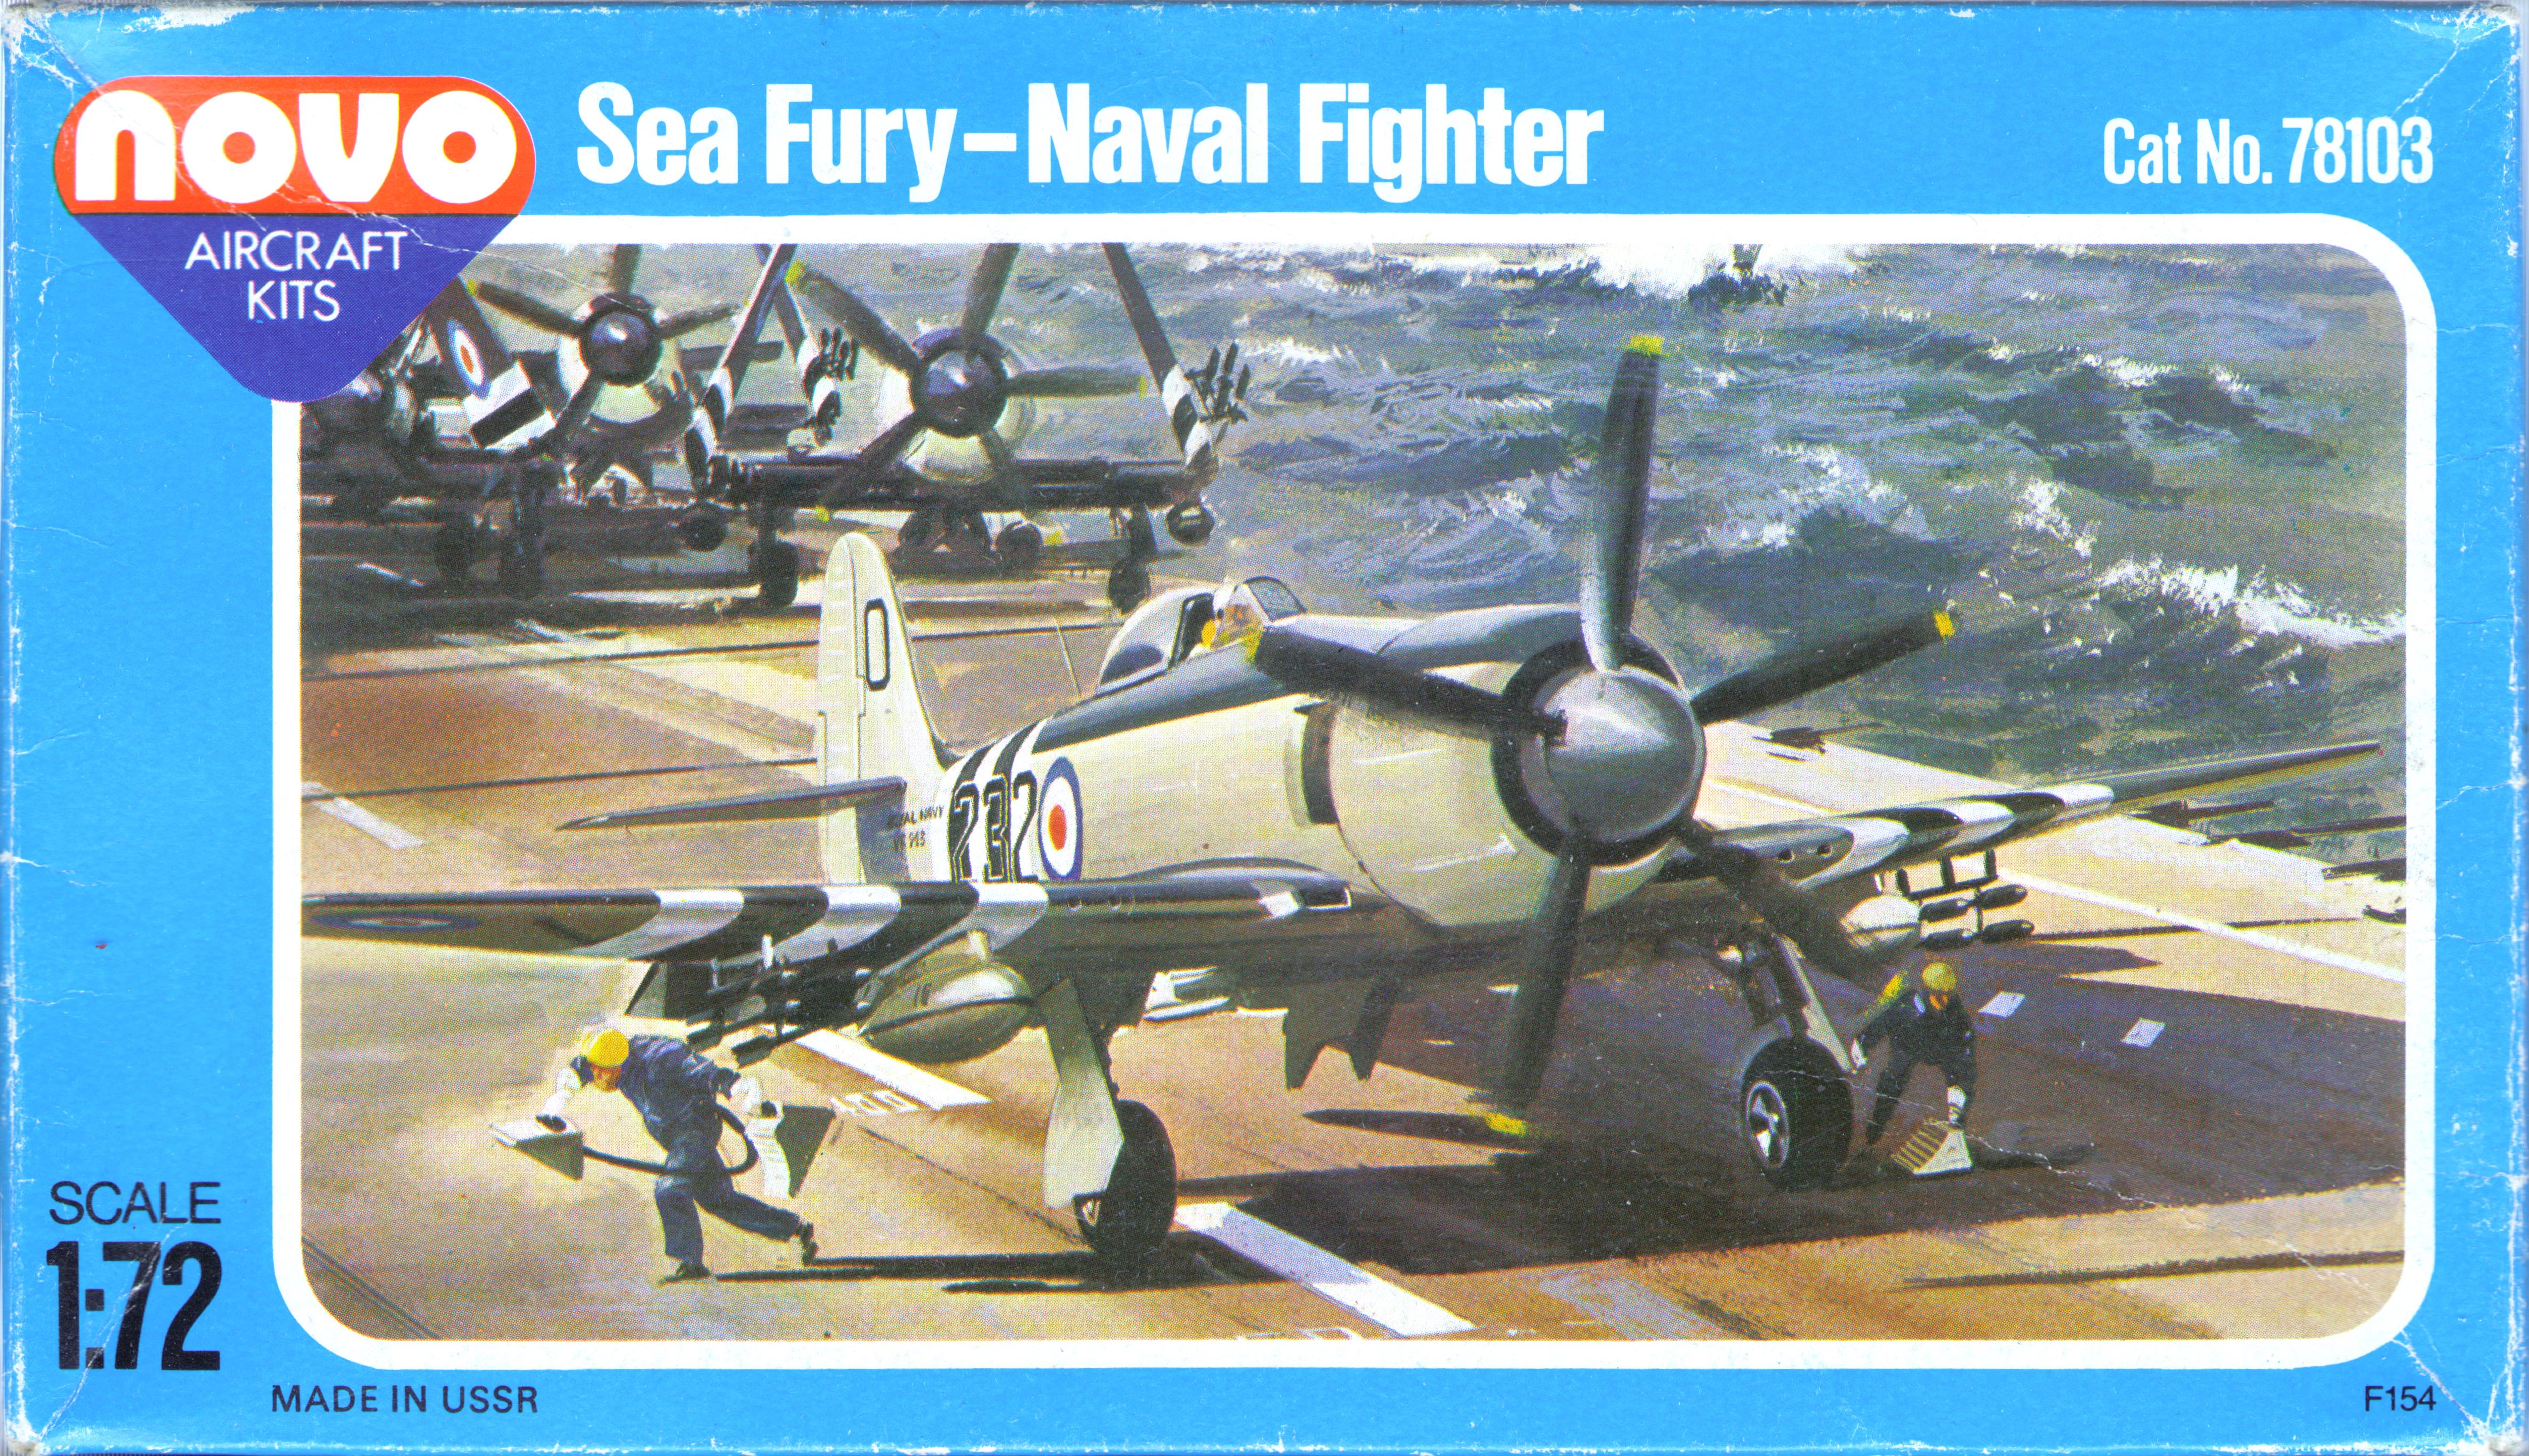  Верх коробки NOVO Toys Ltd F154 Hawker Sea Fury, 1980